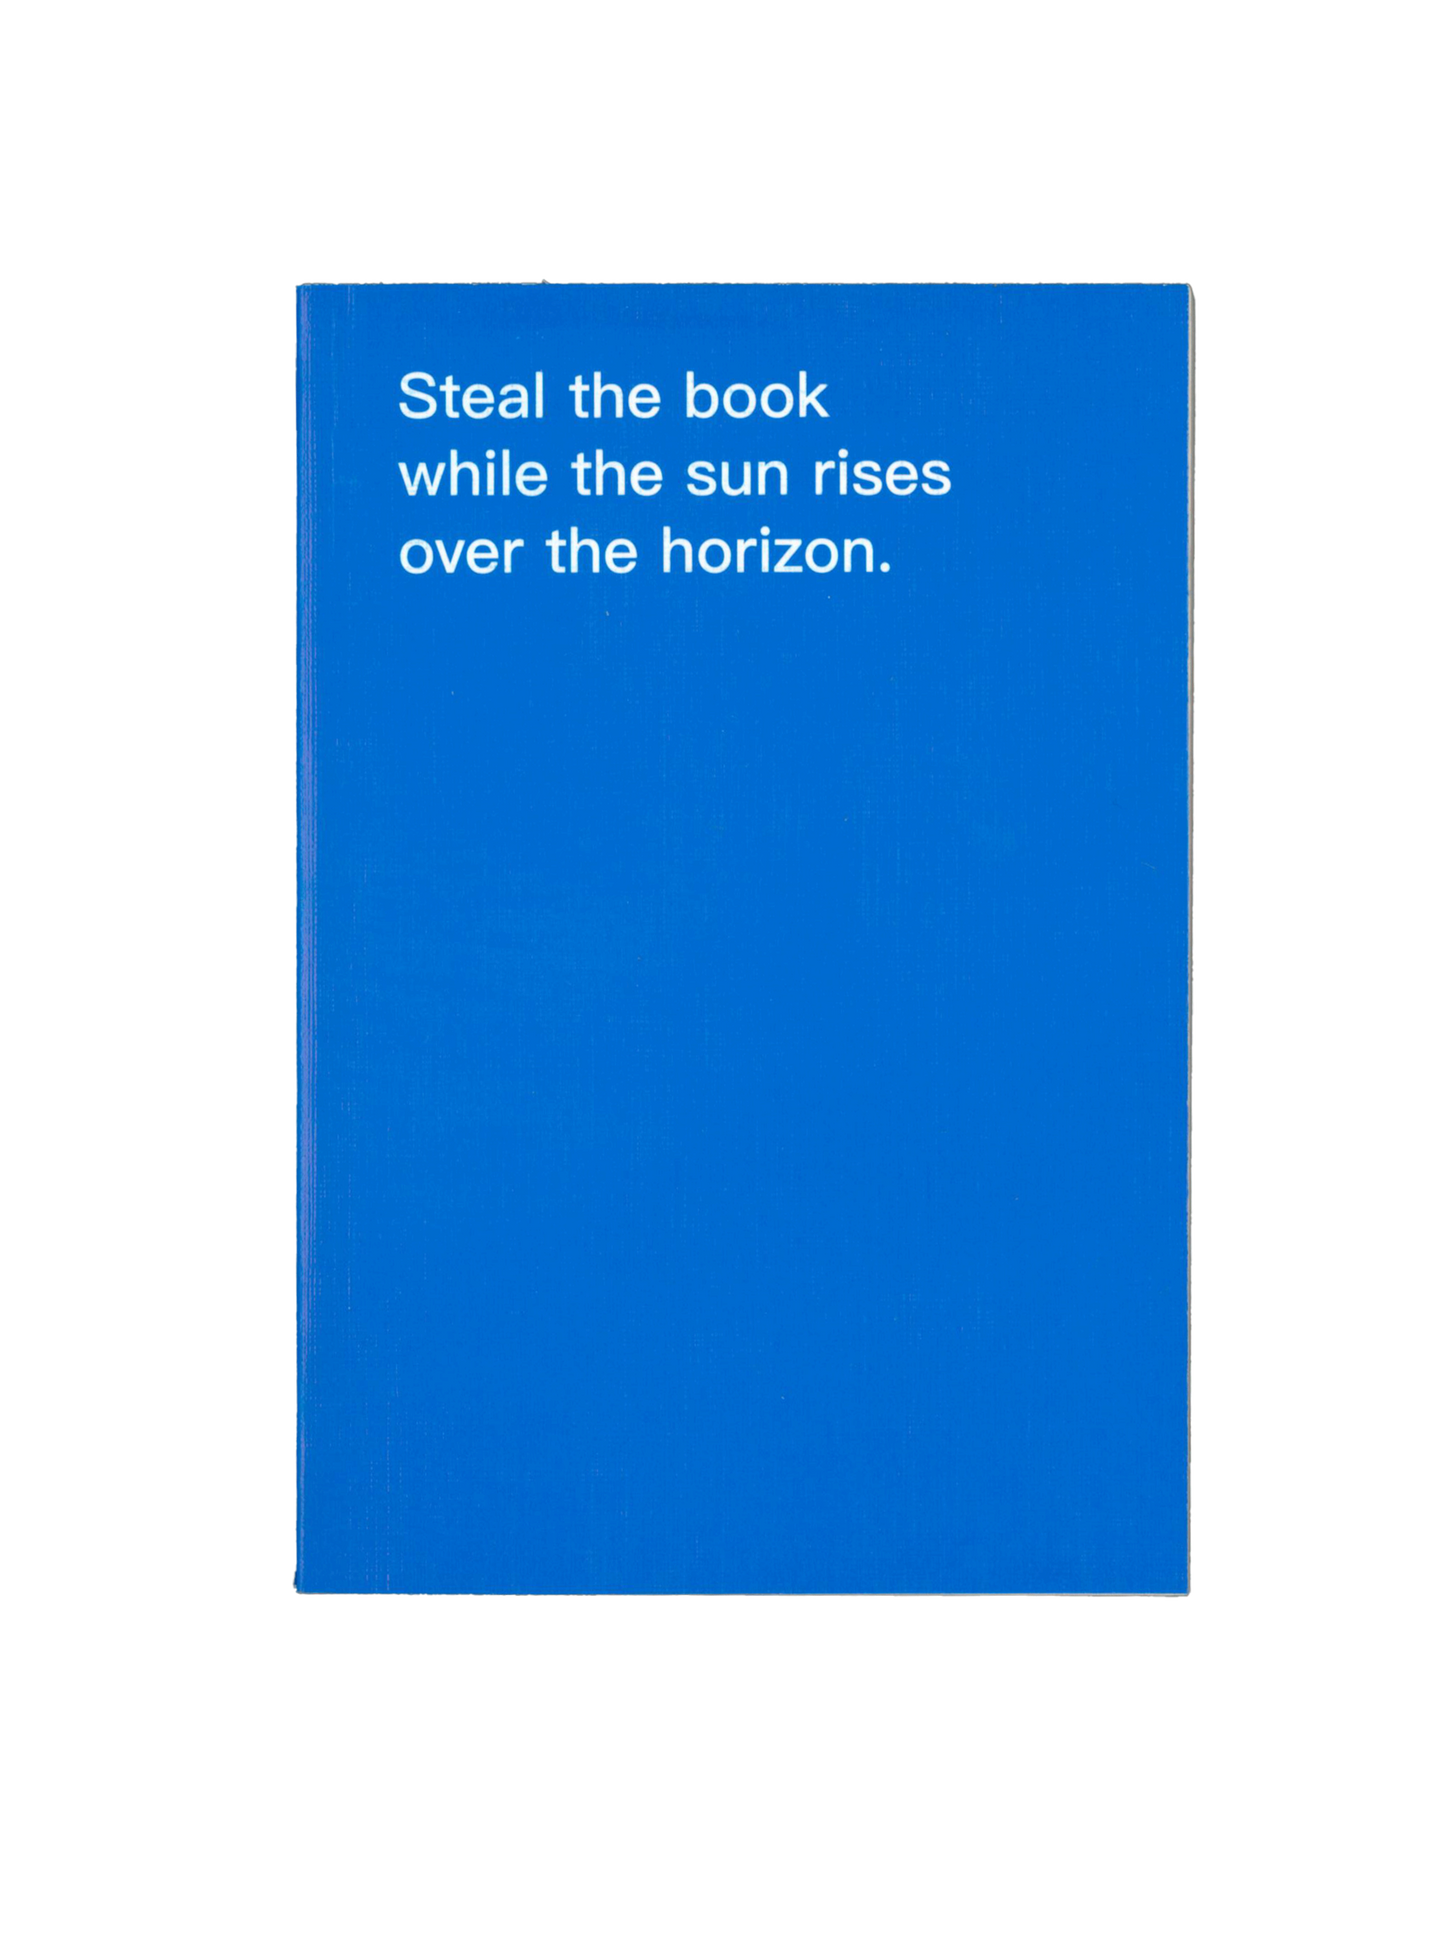 How to shoplift books by David Horvitz